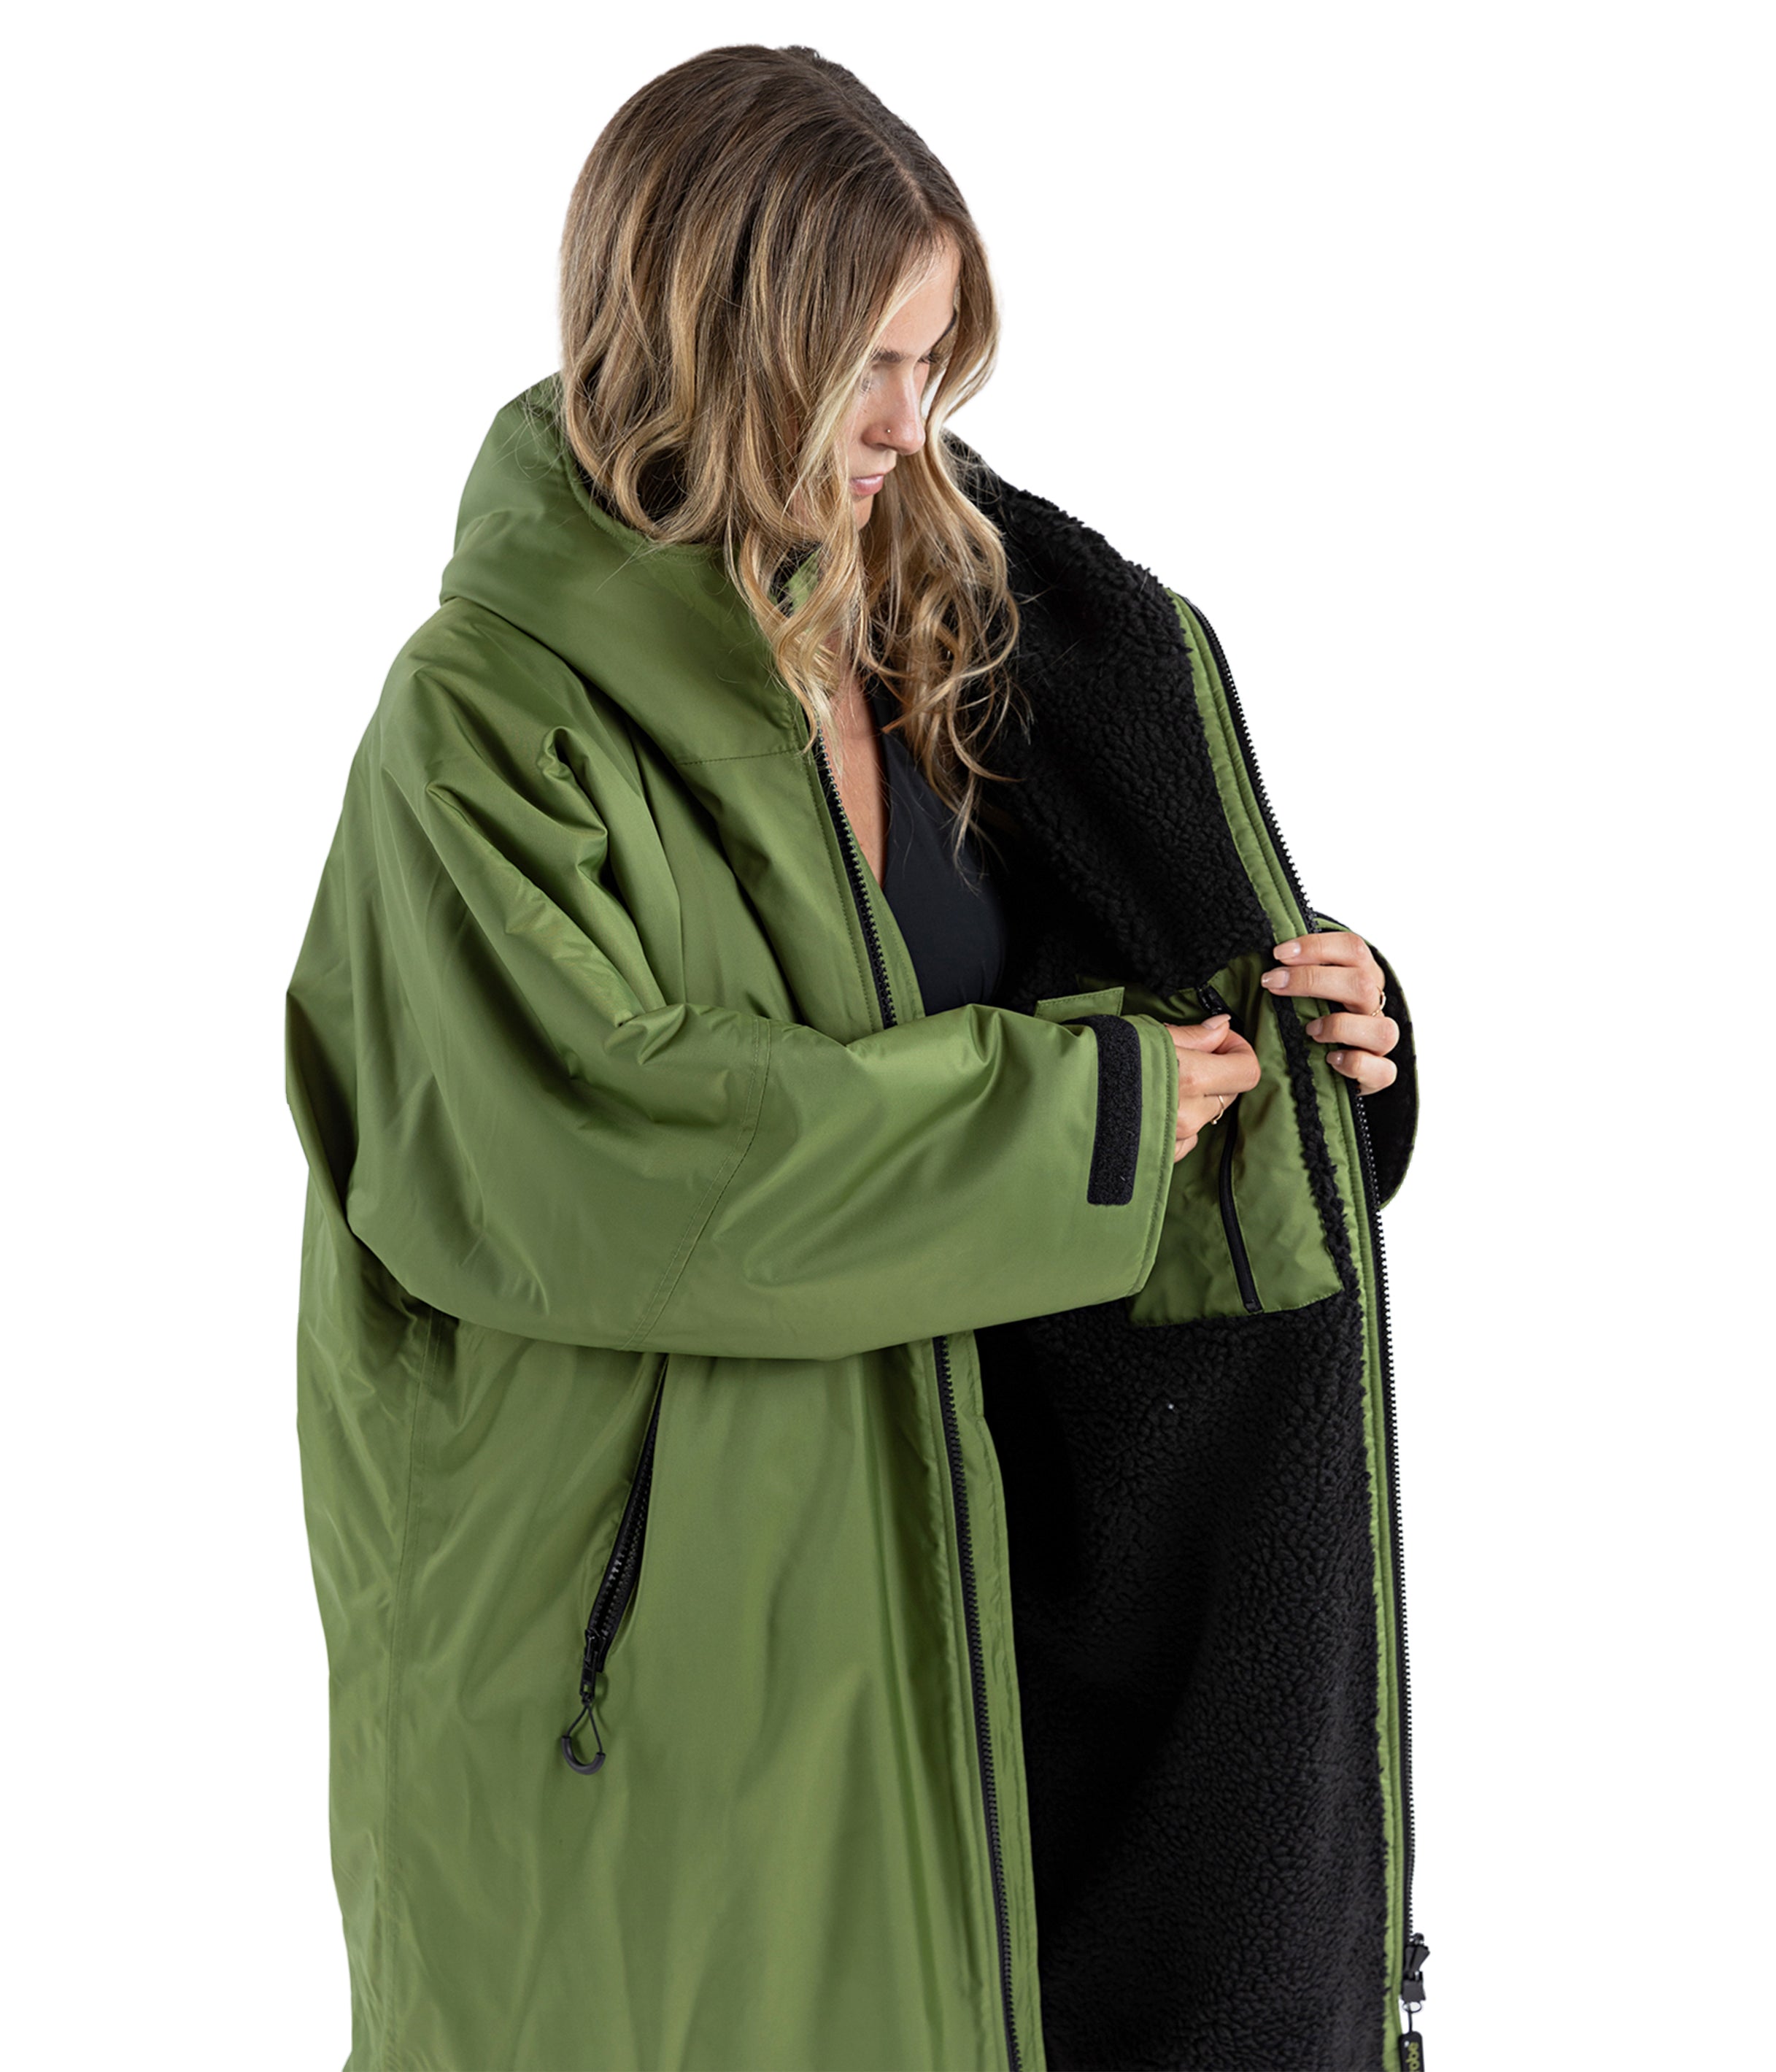 dryrobe Advance Long Sleeve | Forest Green/Black modelled showing fleece lining and internal zipped pocket